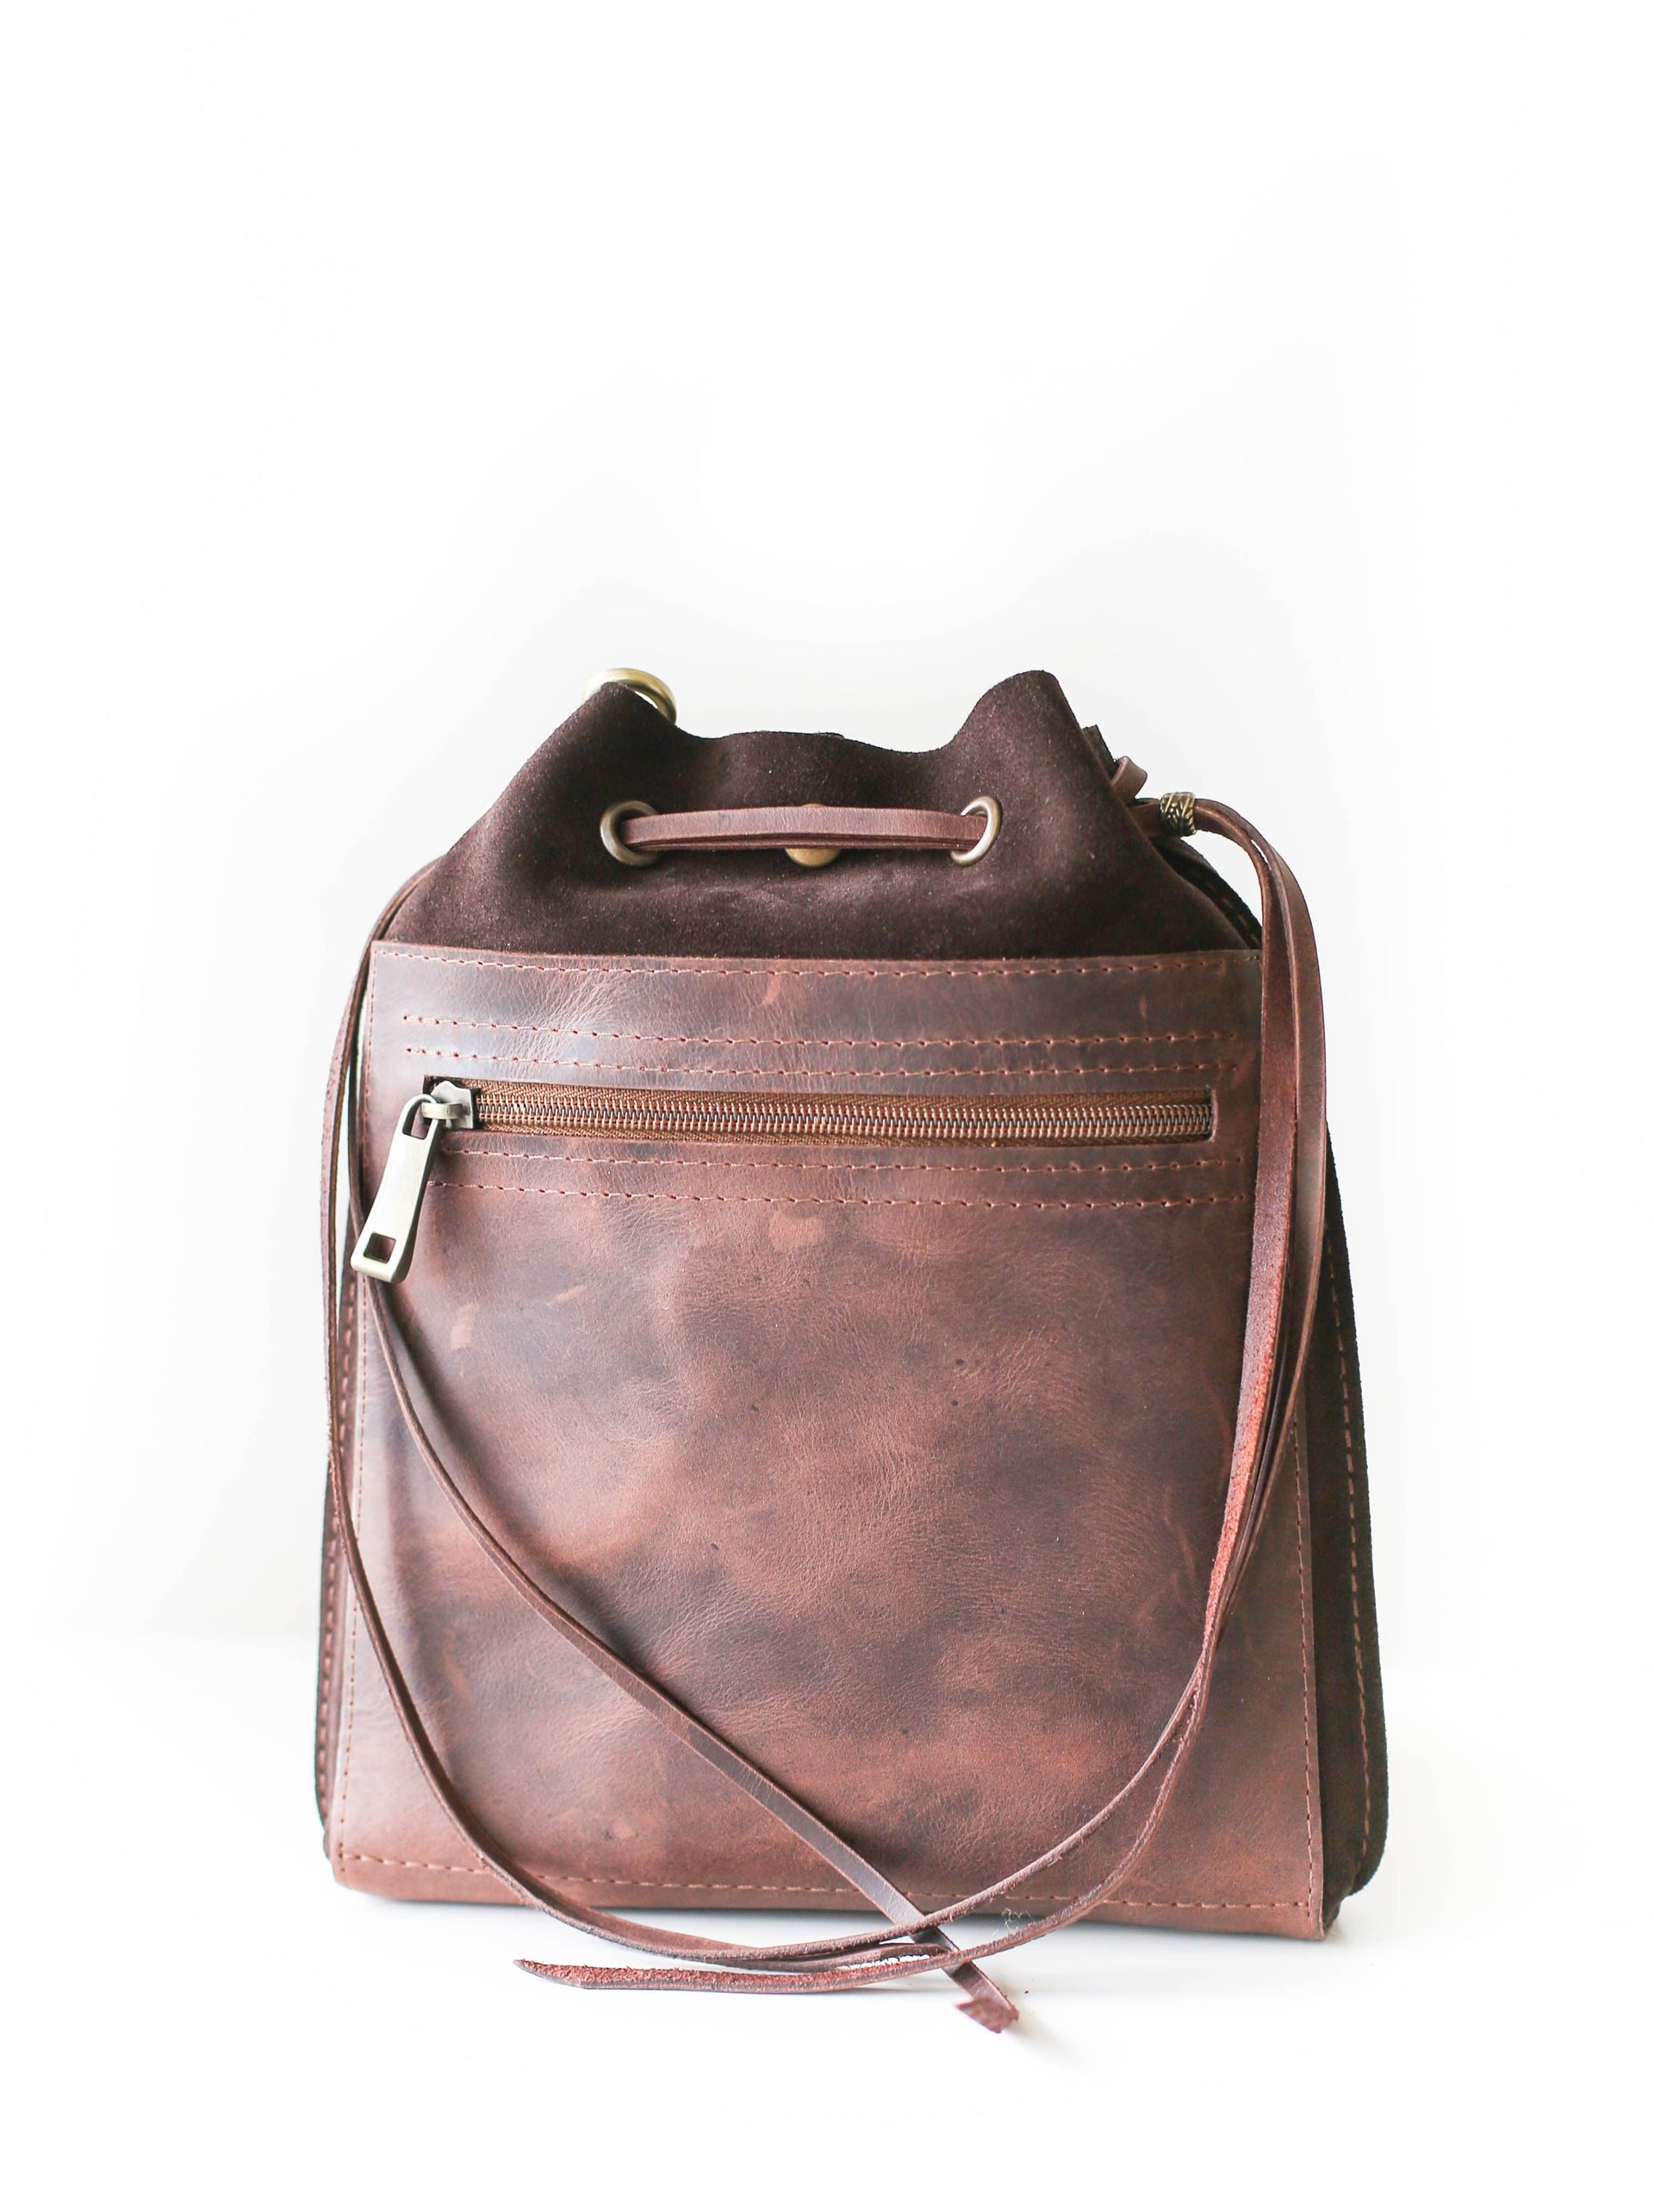 suede brown purse